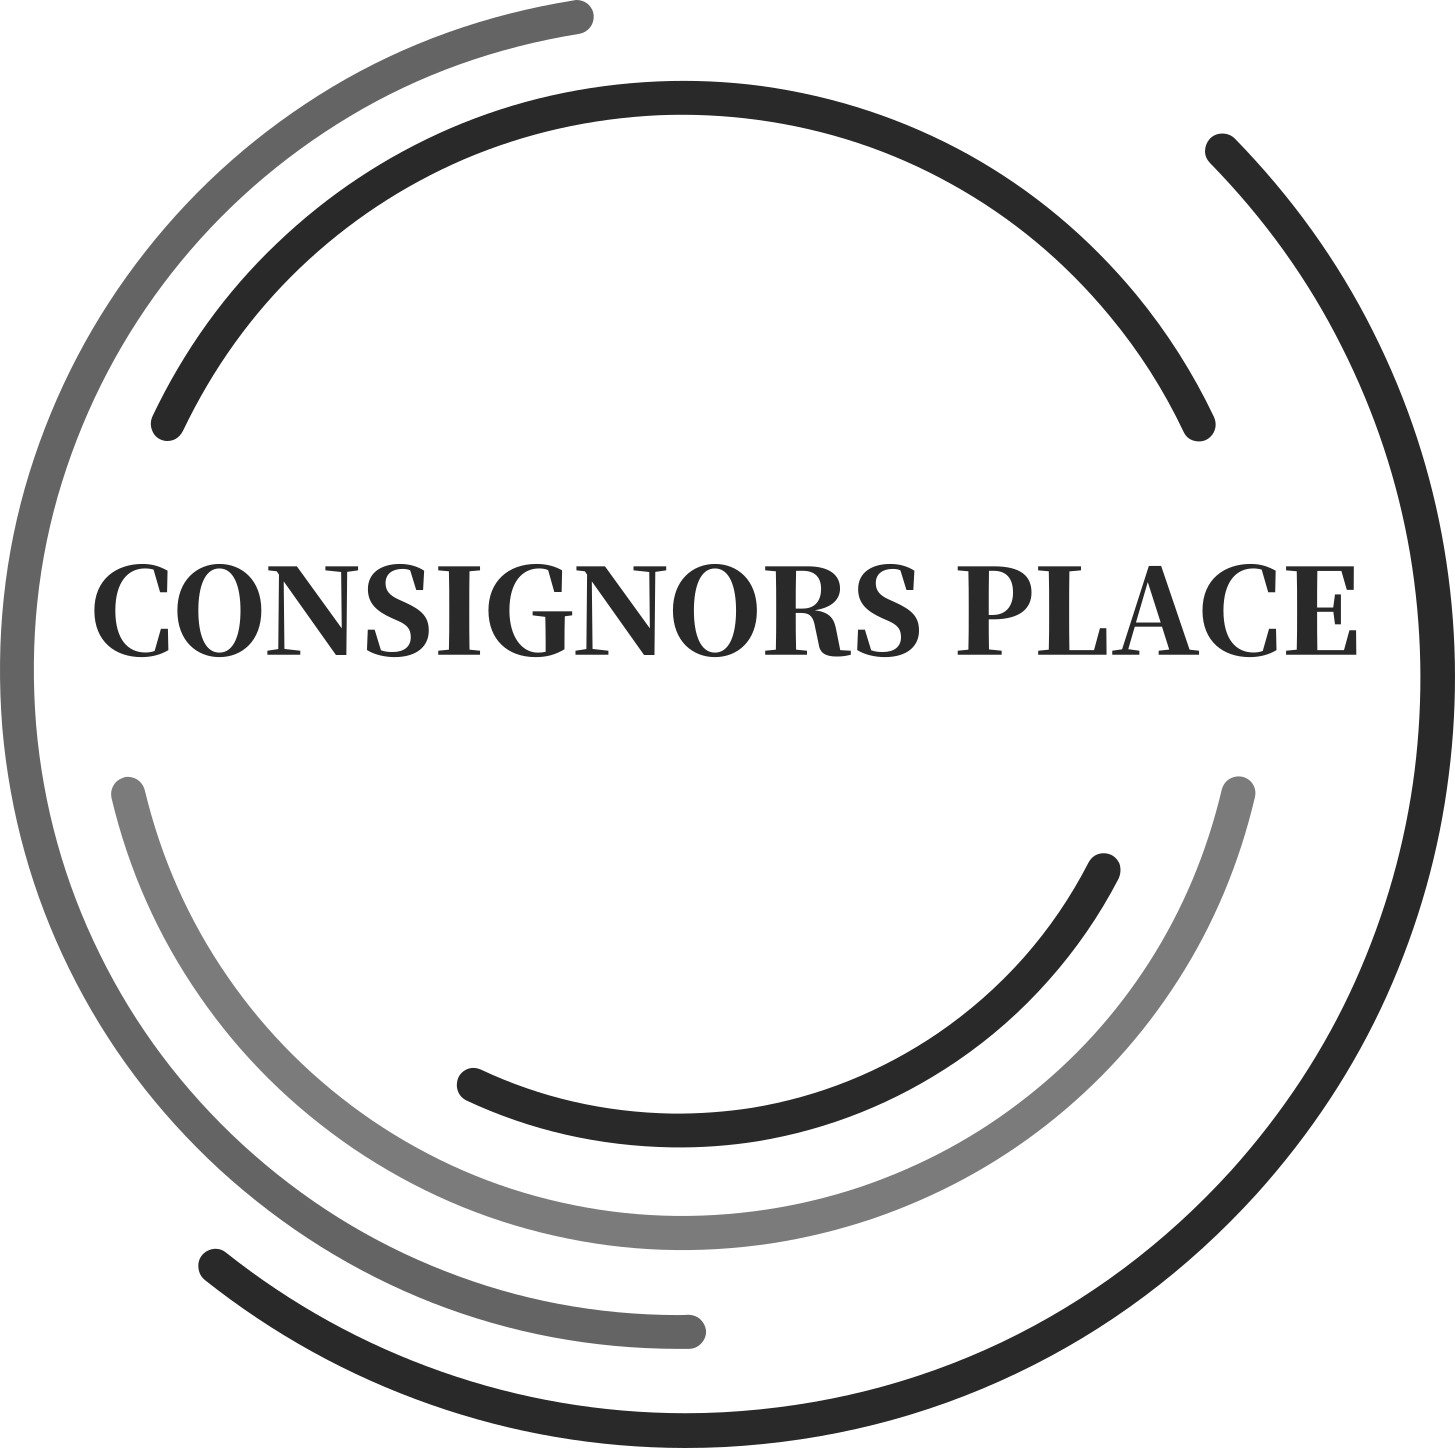 Consignor's Place